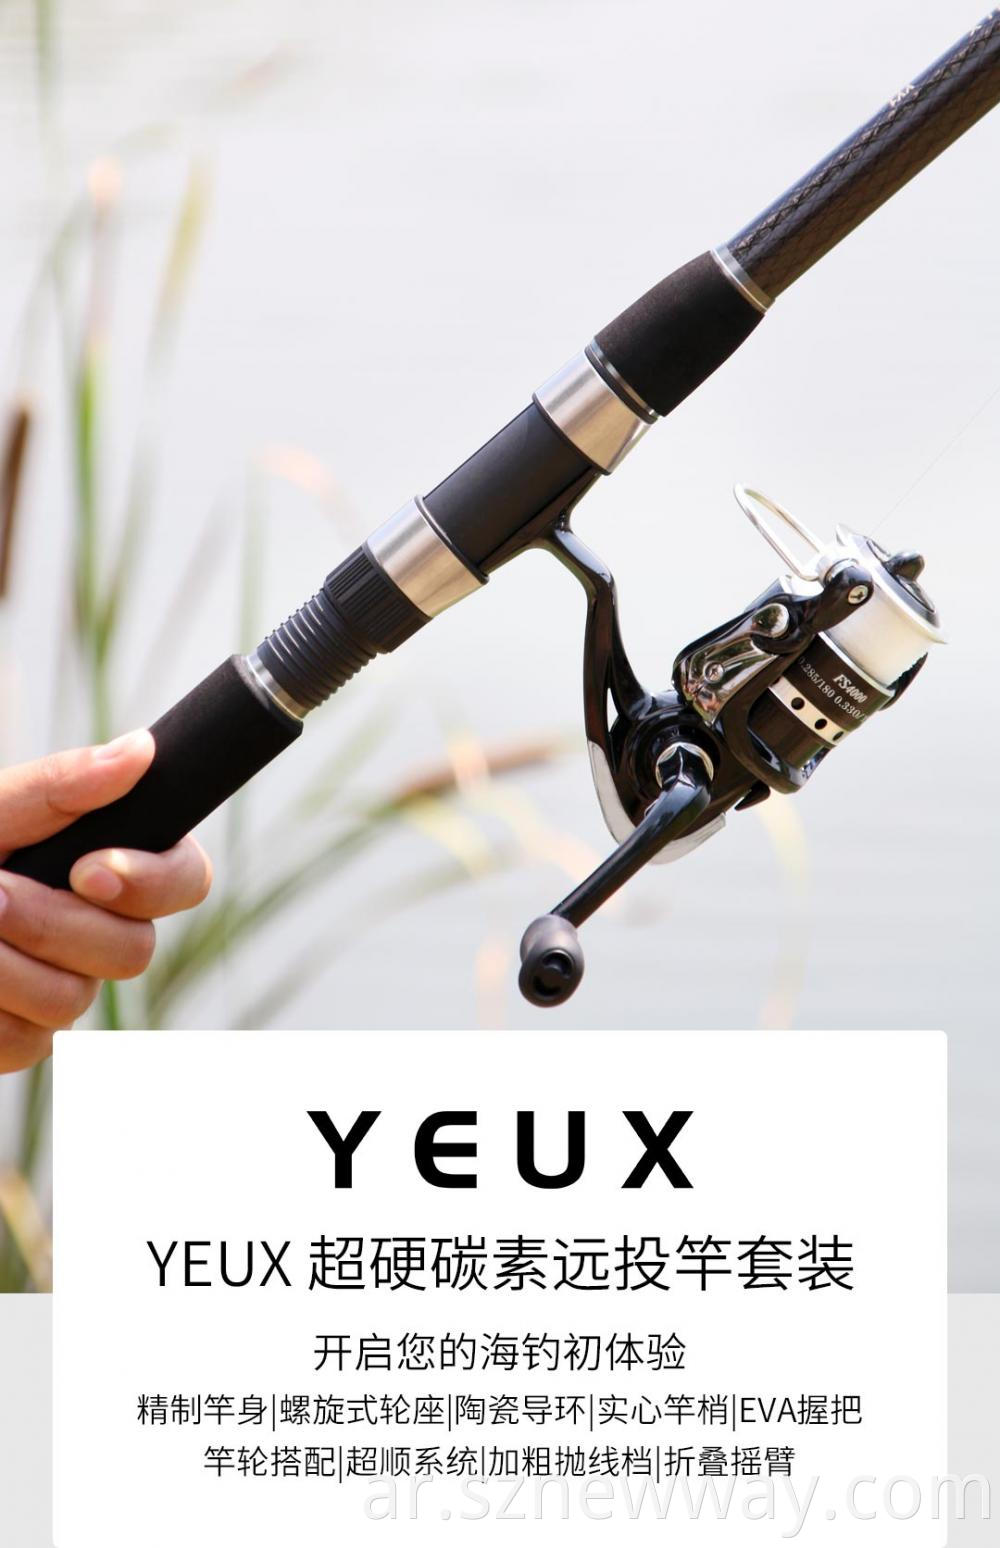 Yeux Fishing Rod